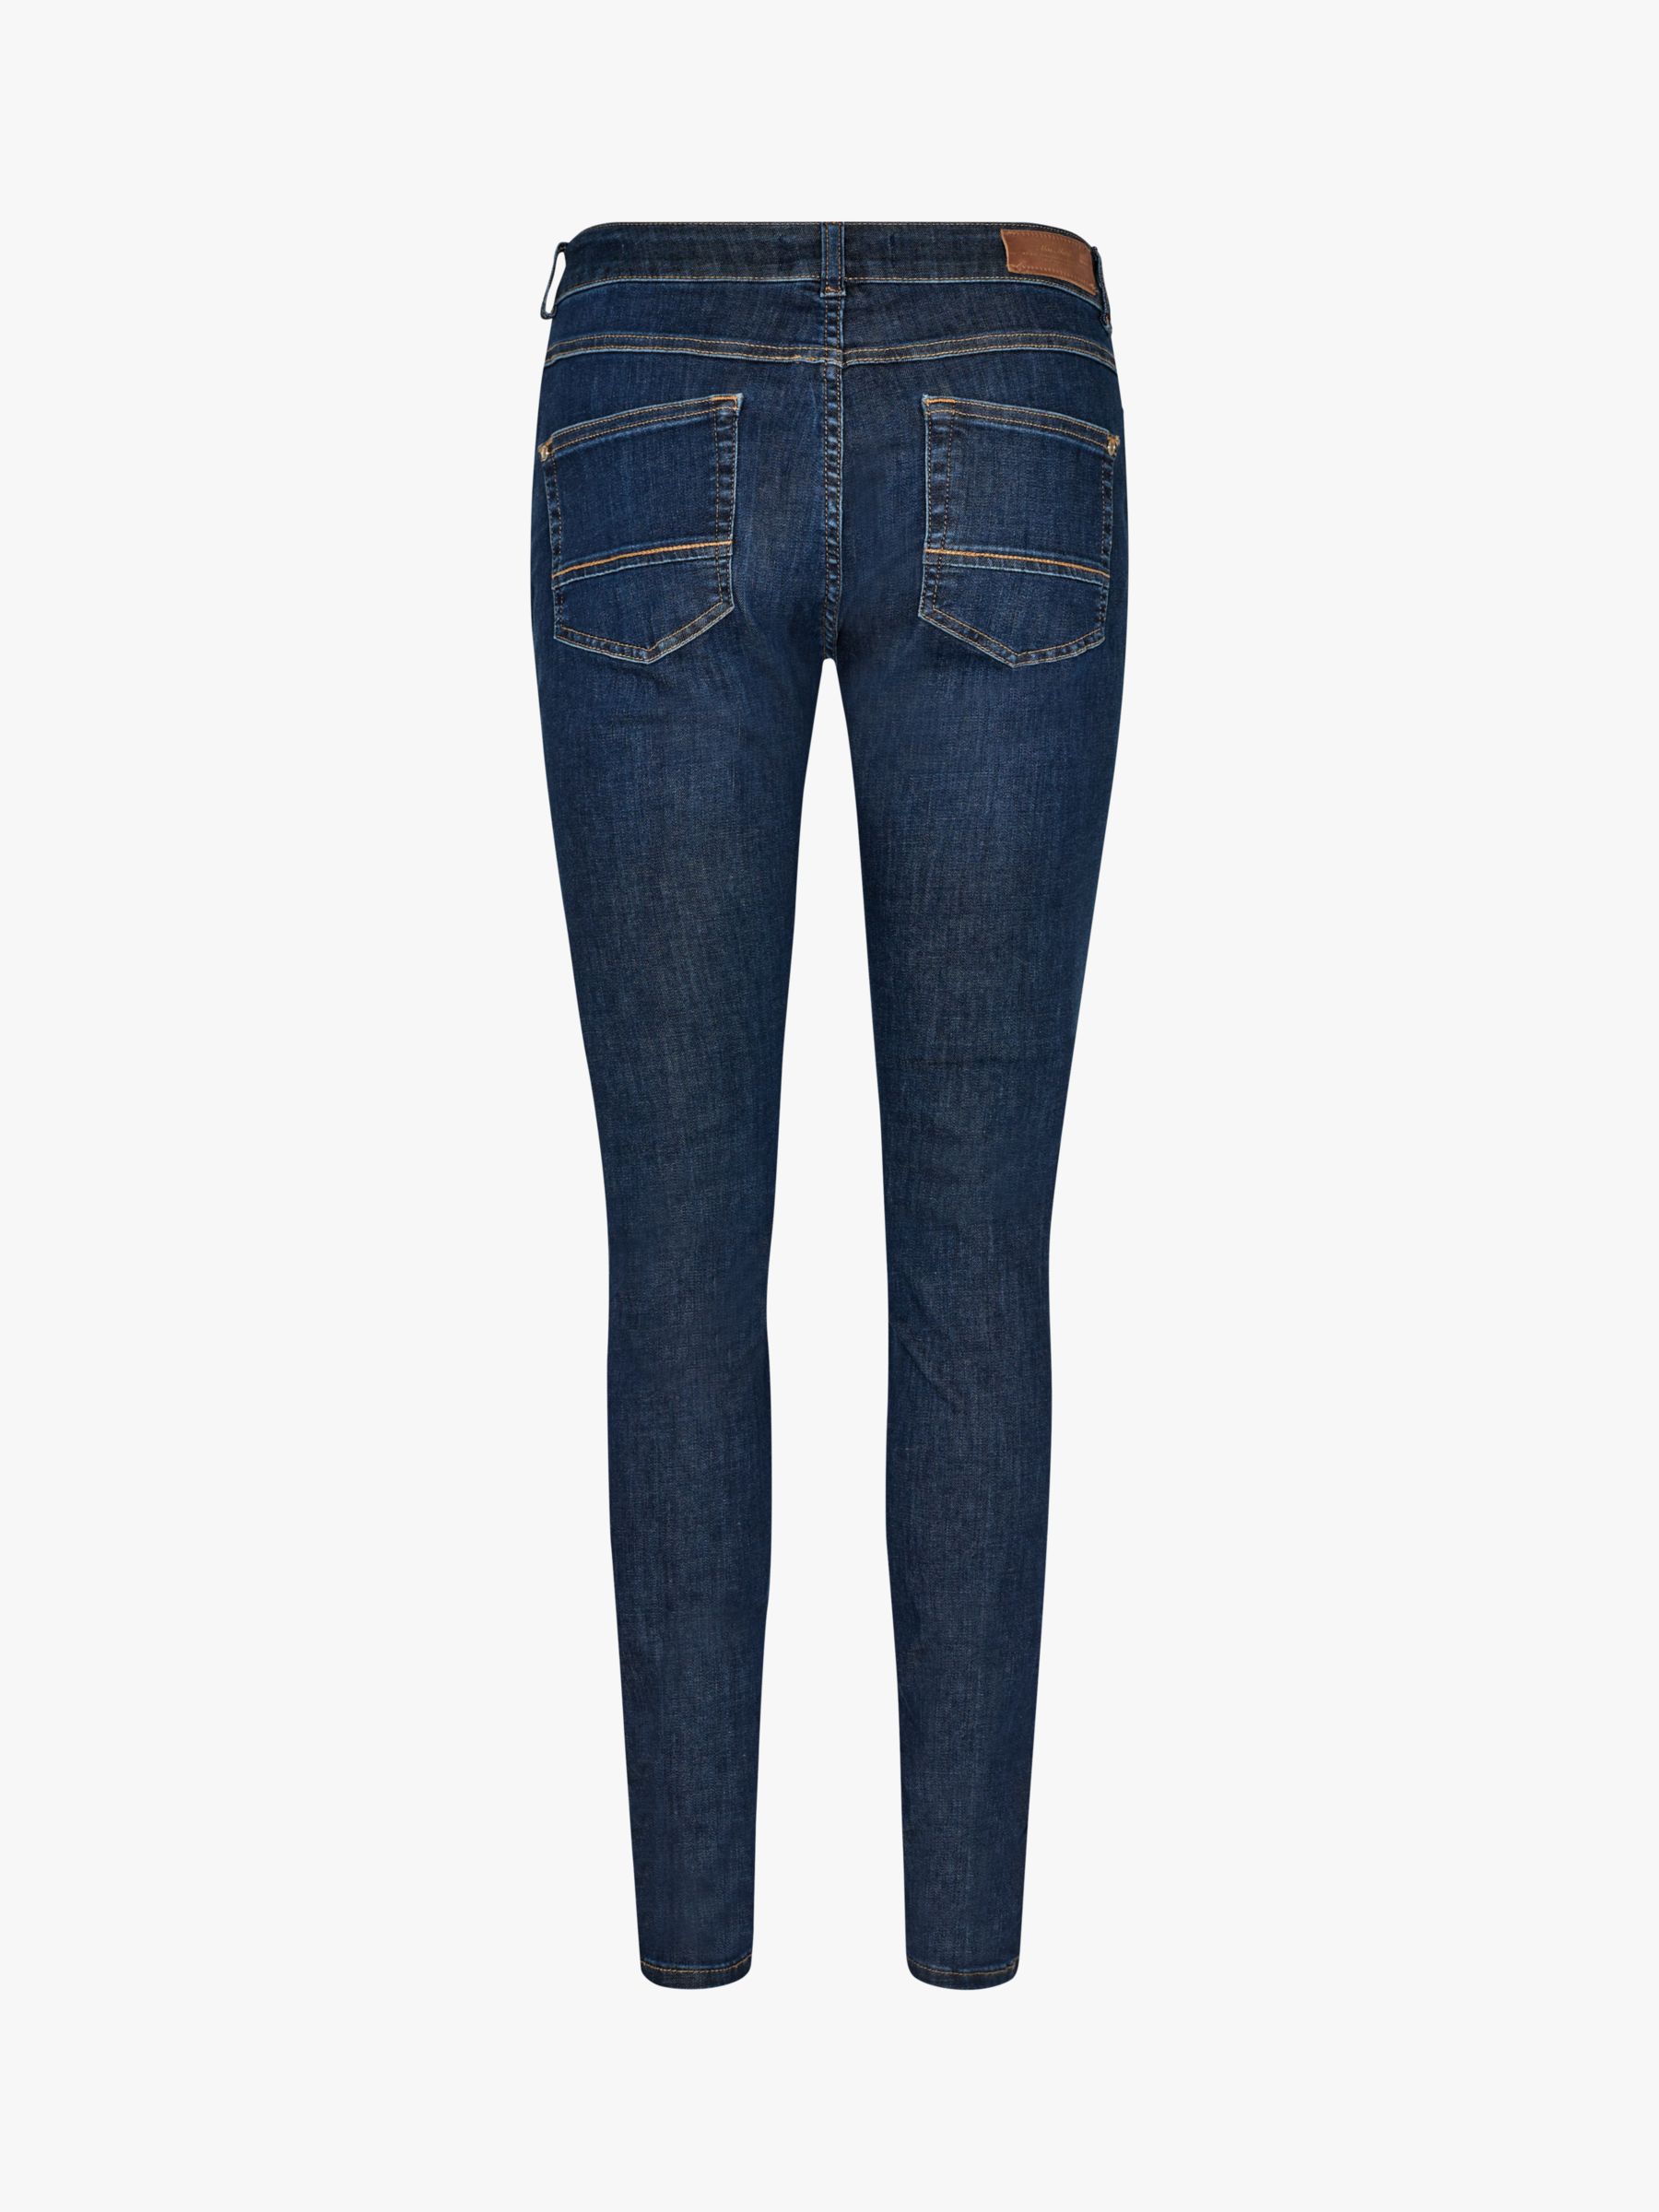 MOS MOSH Naomi Tailored Fit Jeans, Blue Denim, 25R